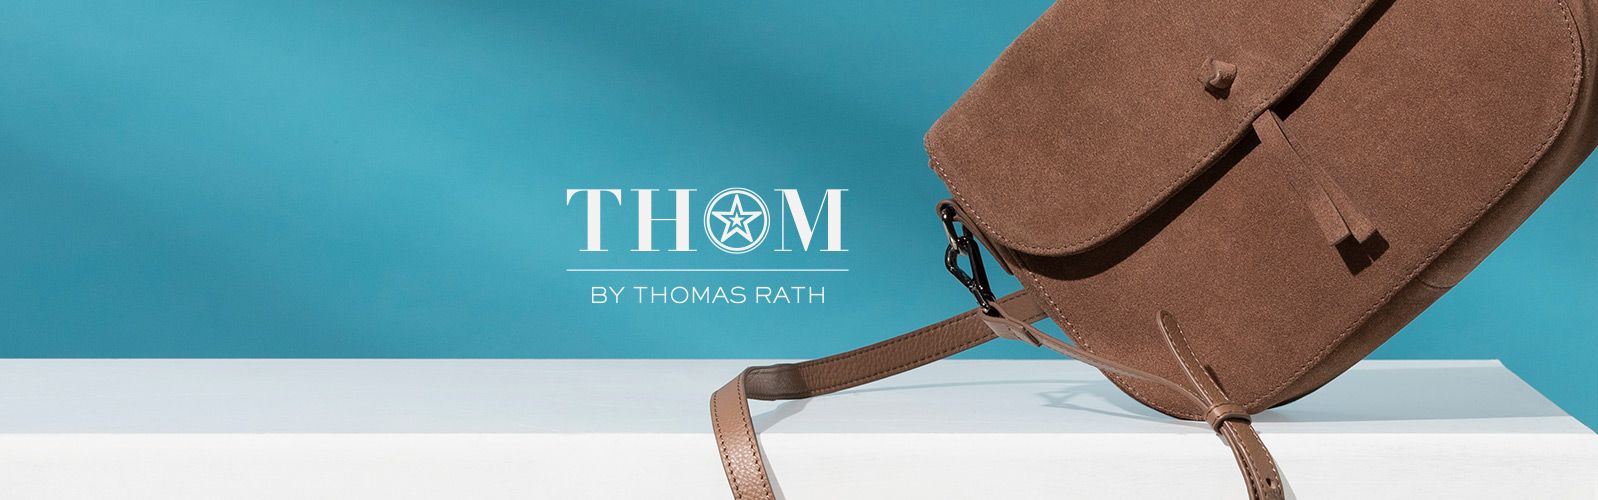 THOM by Thomas Rath Schuhe & Accessoires